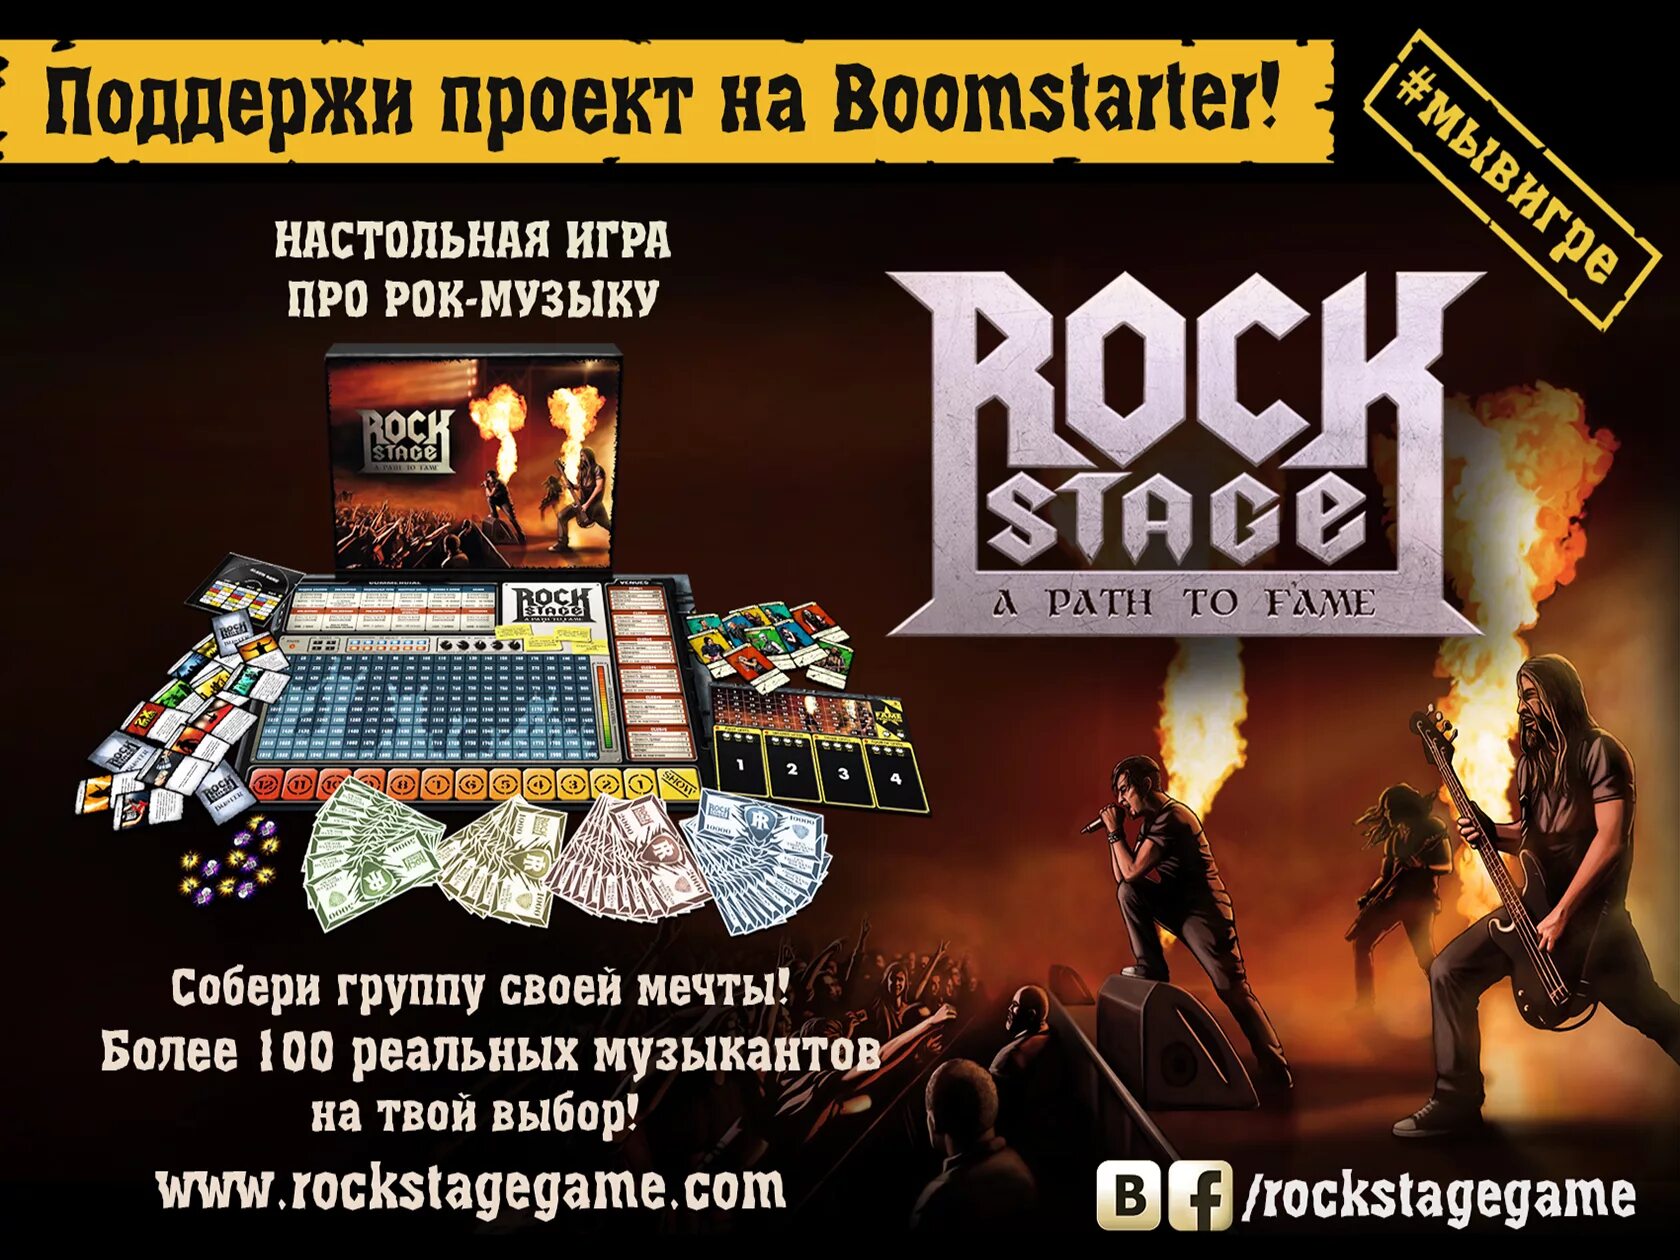 Игры рок песни. Rock Stage: а Path to Fame. Rock Stage игра. Настольная игра Rock Stage: а Path to Fame. Настольная игра для музыкантов.